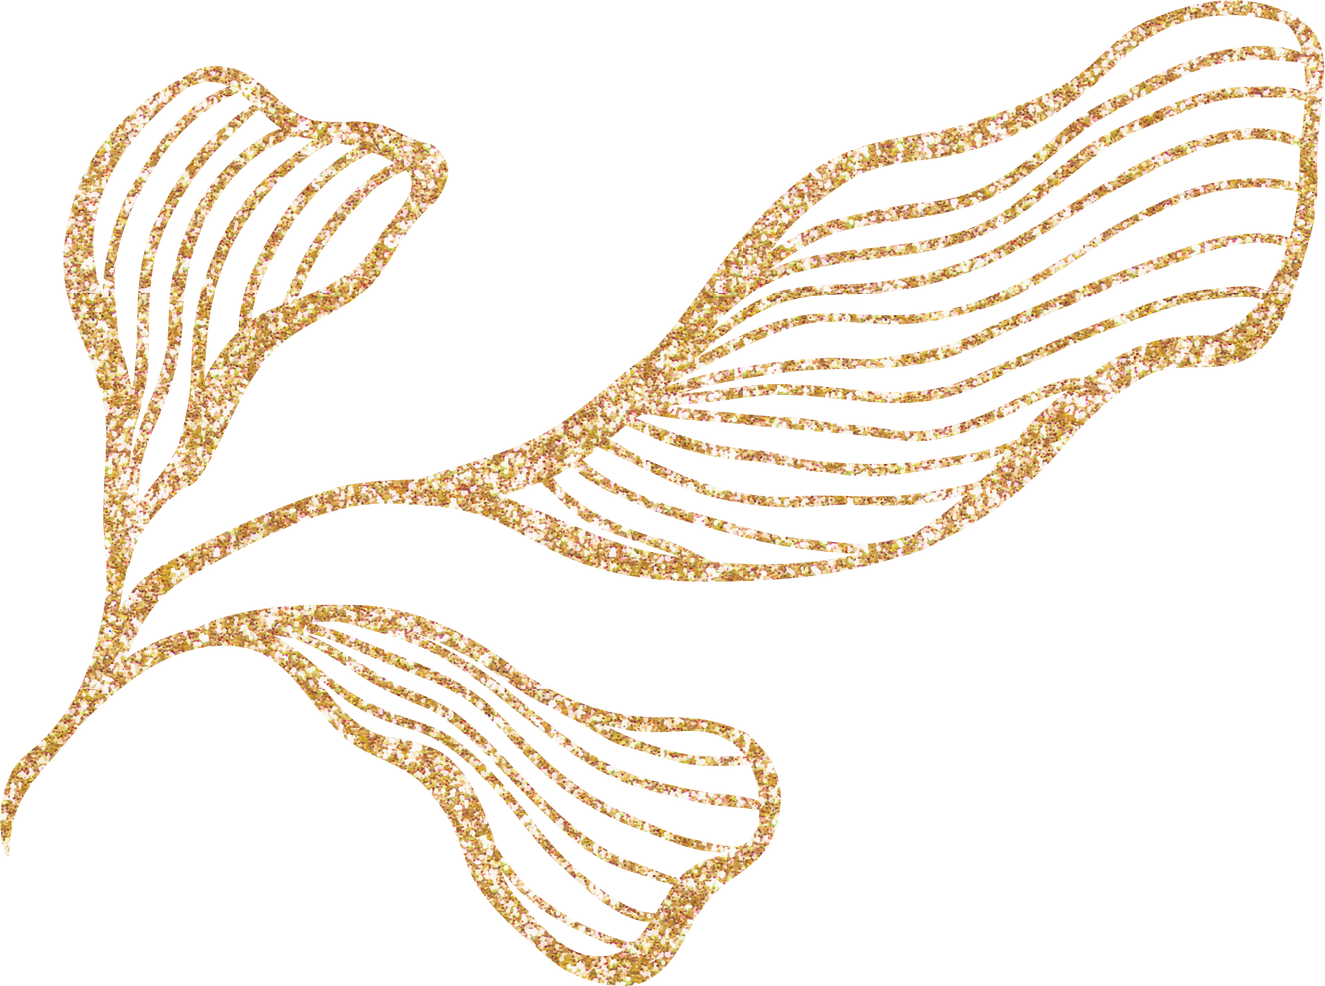 Golden Textured Line Art Object with Glitter